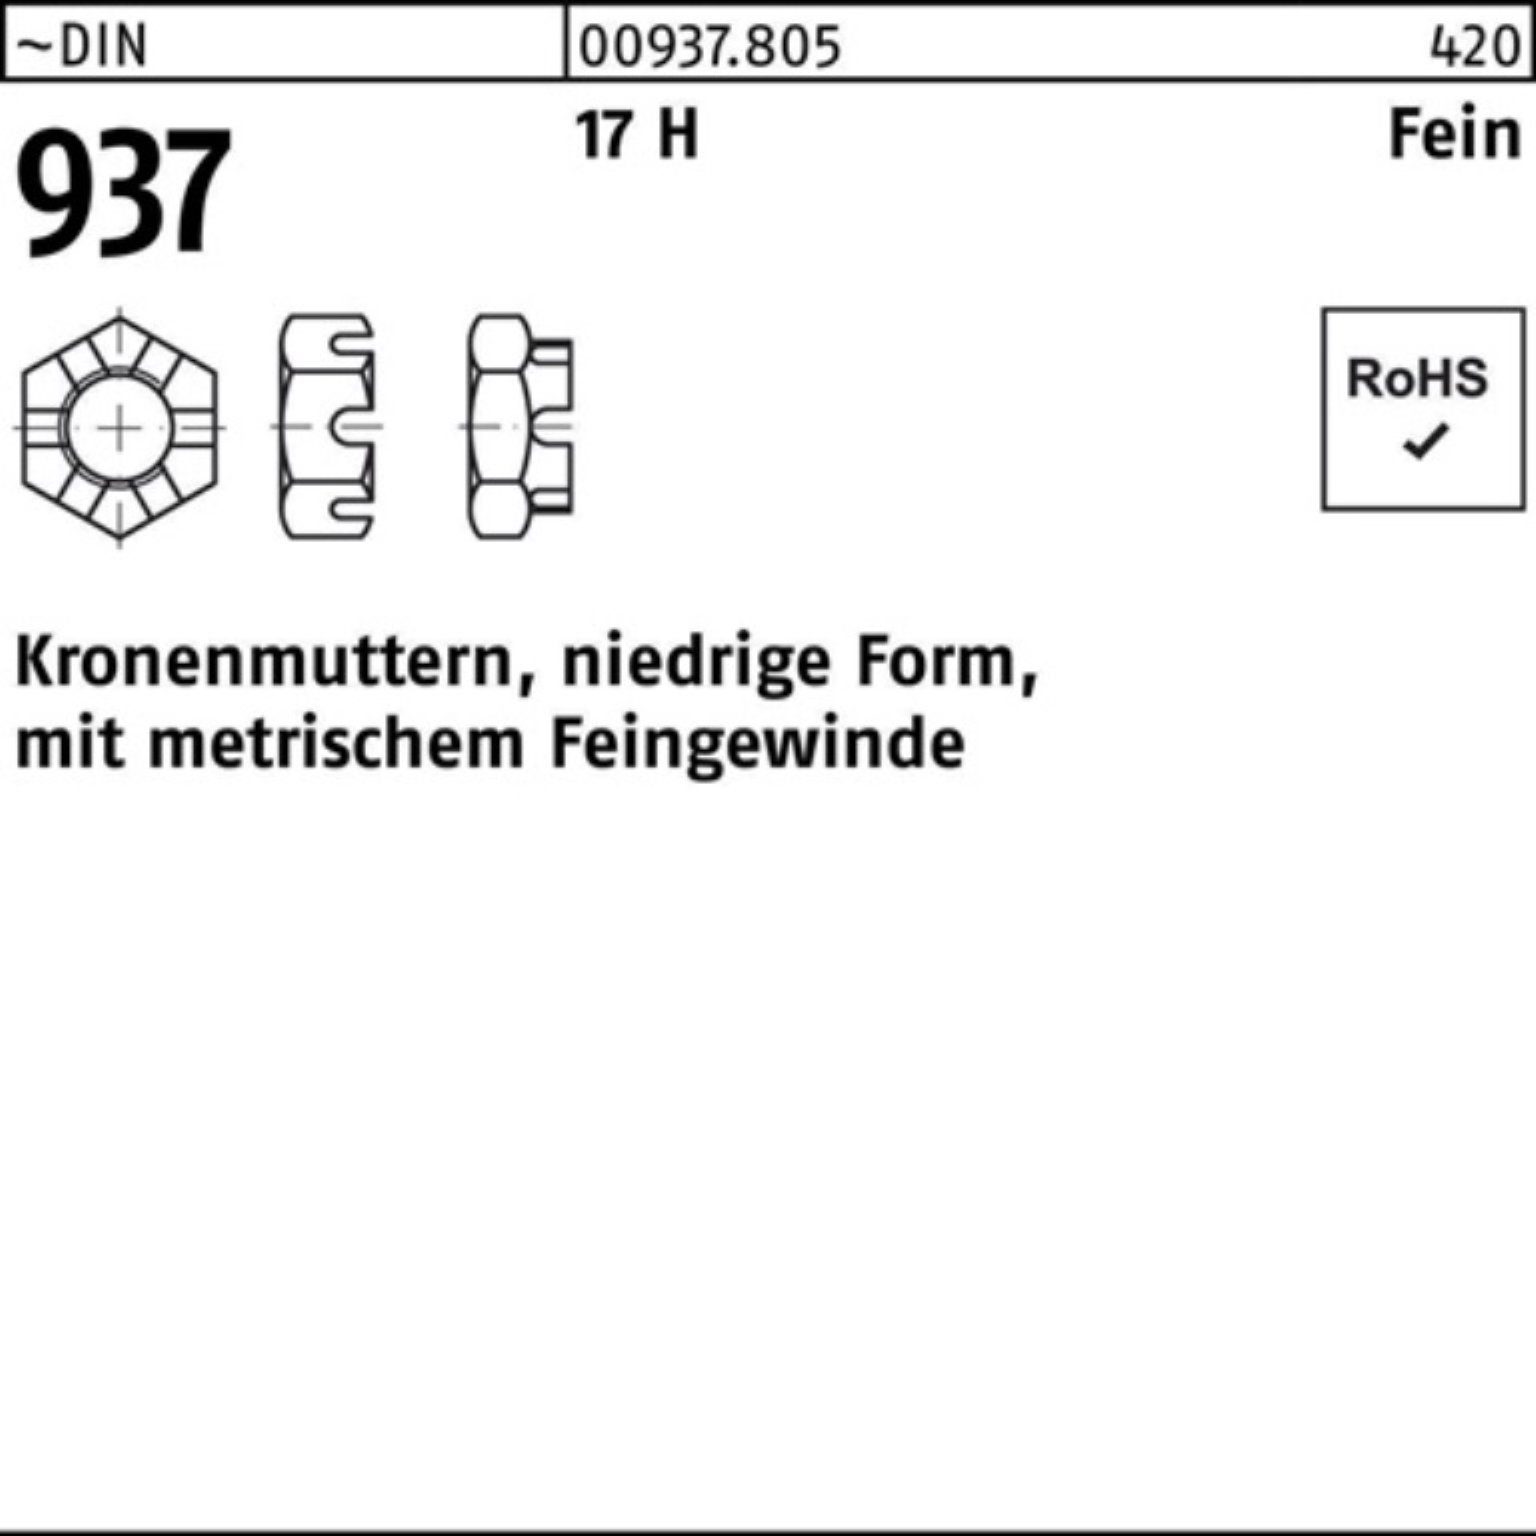 Reyher Kronenmutter 100er Pack Kronenmutter DIN 937 niedrige FormM48x 3 17 H Feingew. 1 St | Muttern